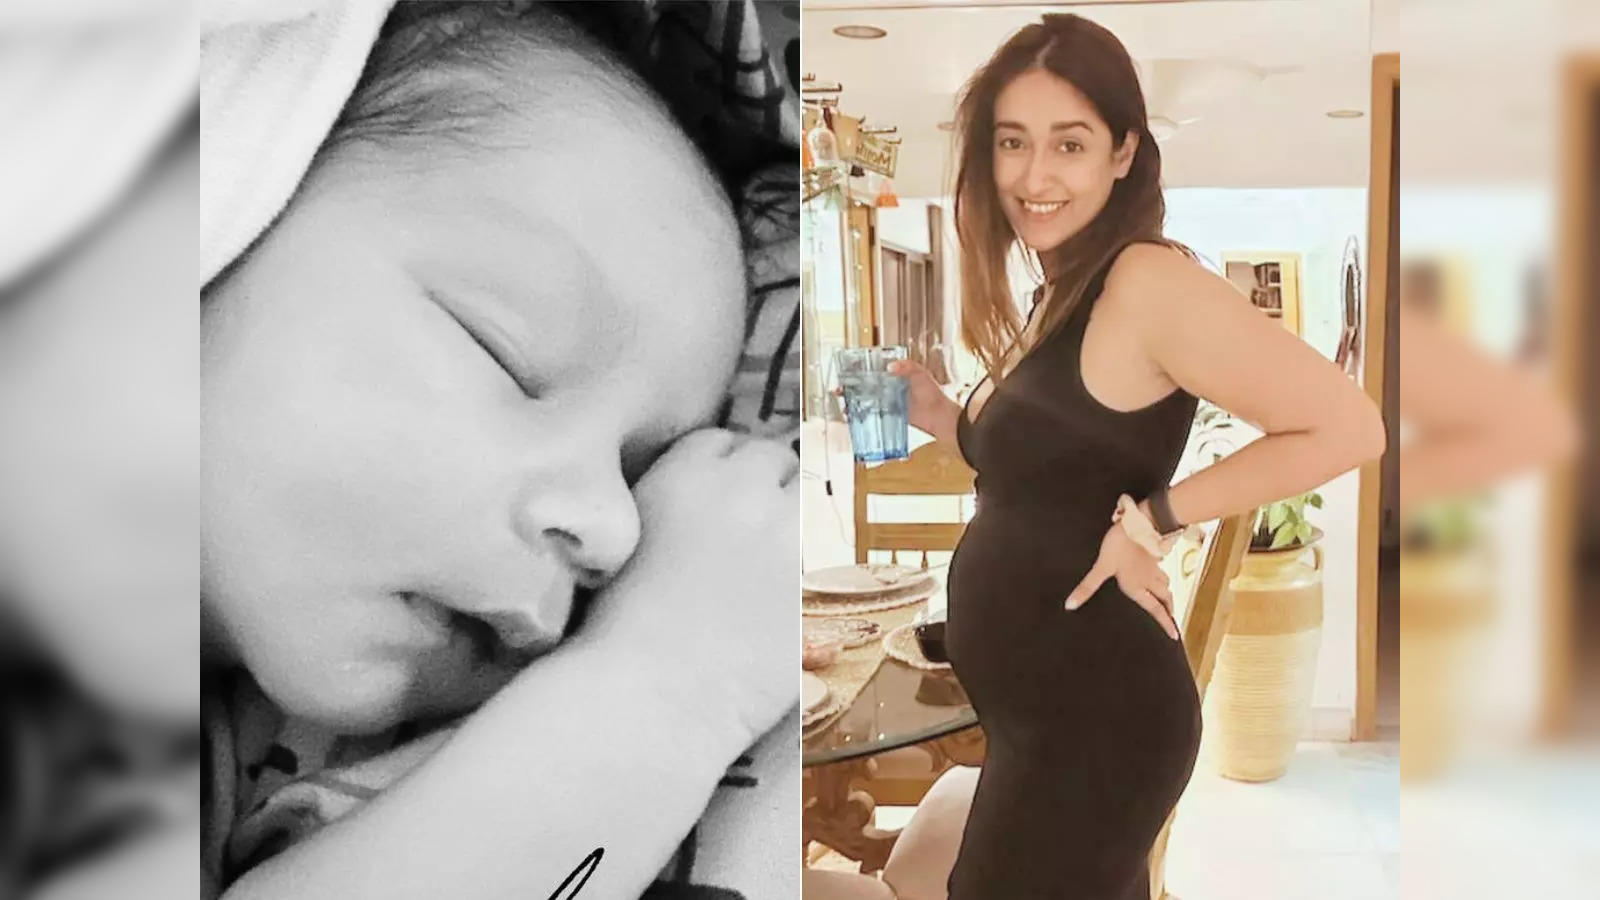 Sileping Mom San Xxx - ileana: Ileana D' Cruz becomes a mom! 'Barfi' star welcomes first child, a  baby boy - The Economic Times